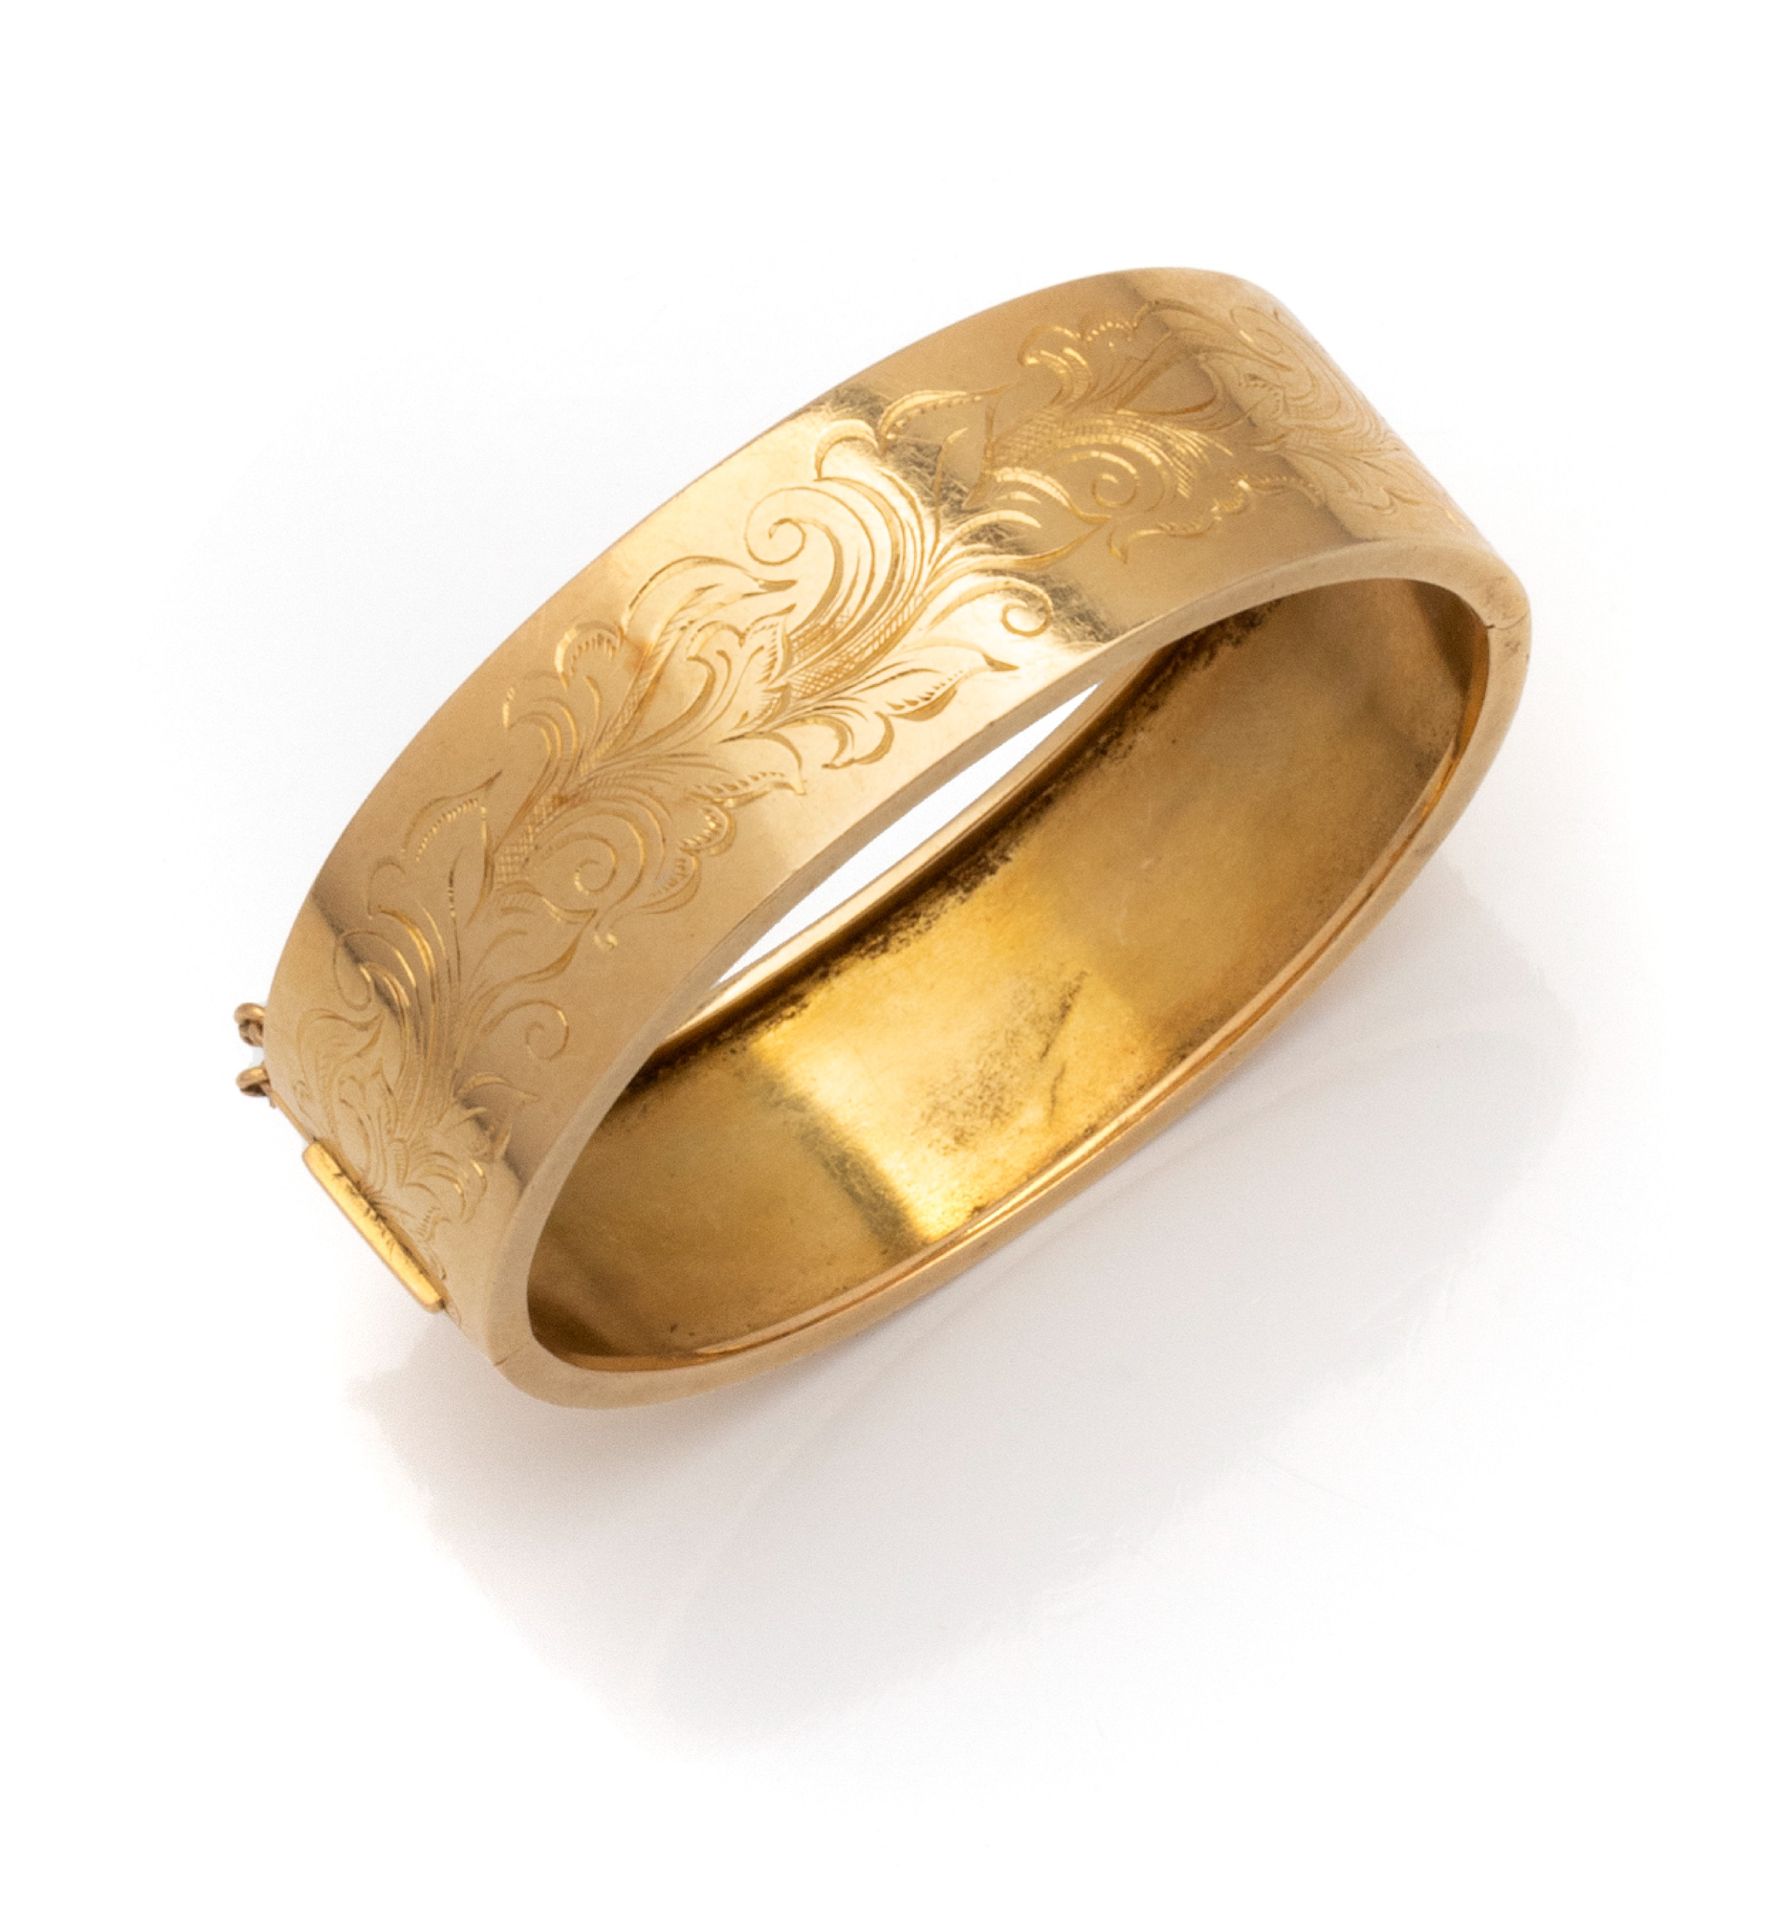 Null 18K（750/1000）黄金刚性开口手镯，刻有叶子和小叶子的装饰。

棘轮扣

法国省级作品，20世纪下半叶。

印记：G-hame-M

手腕尺寸&hellip;